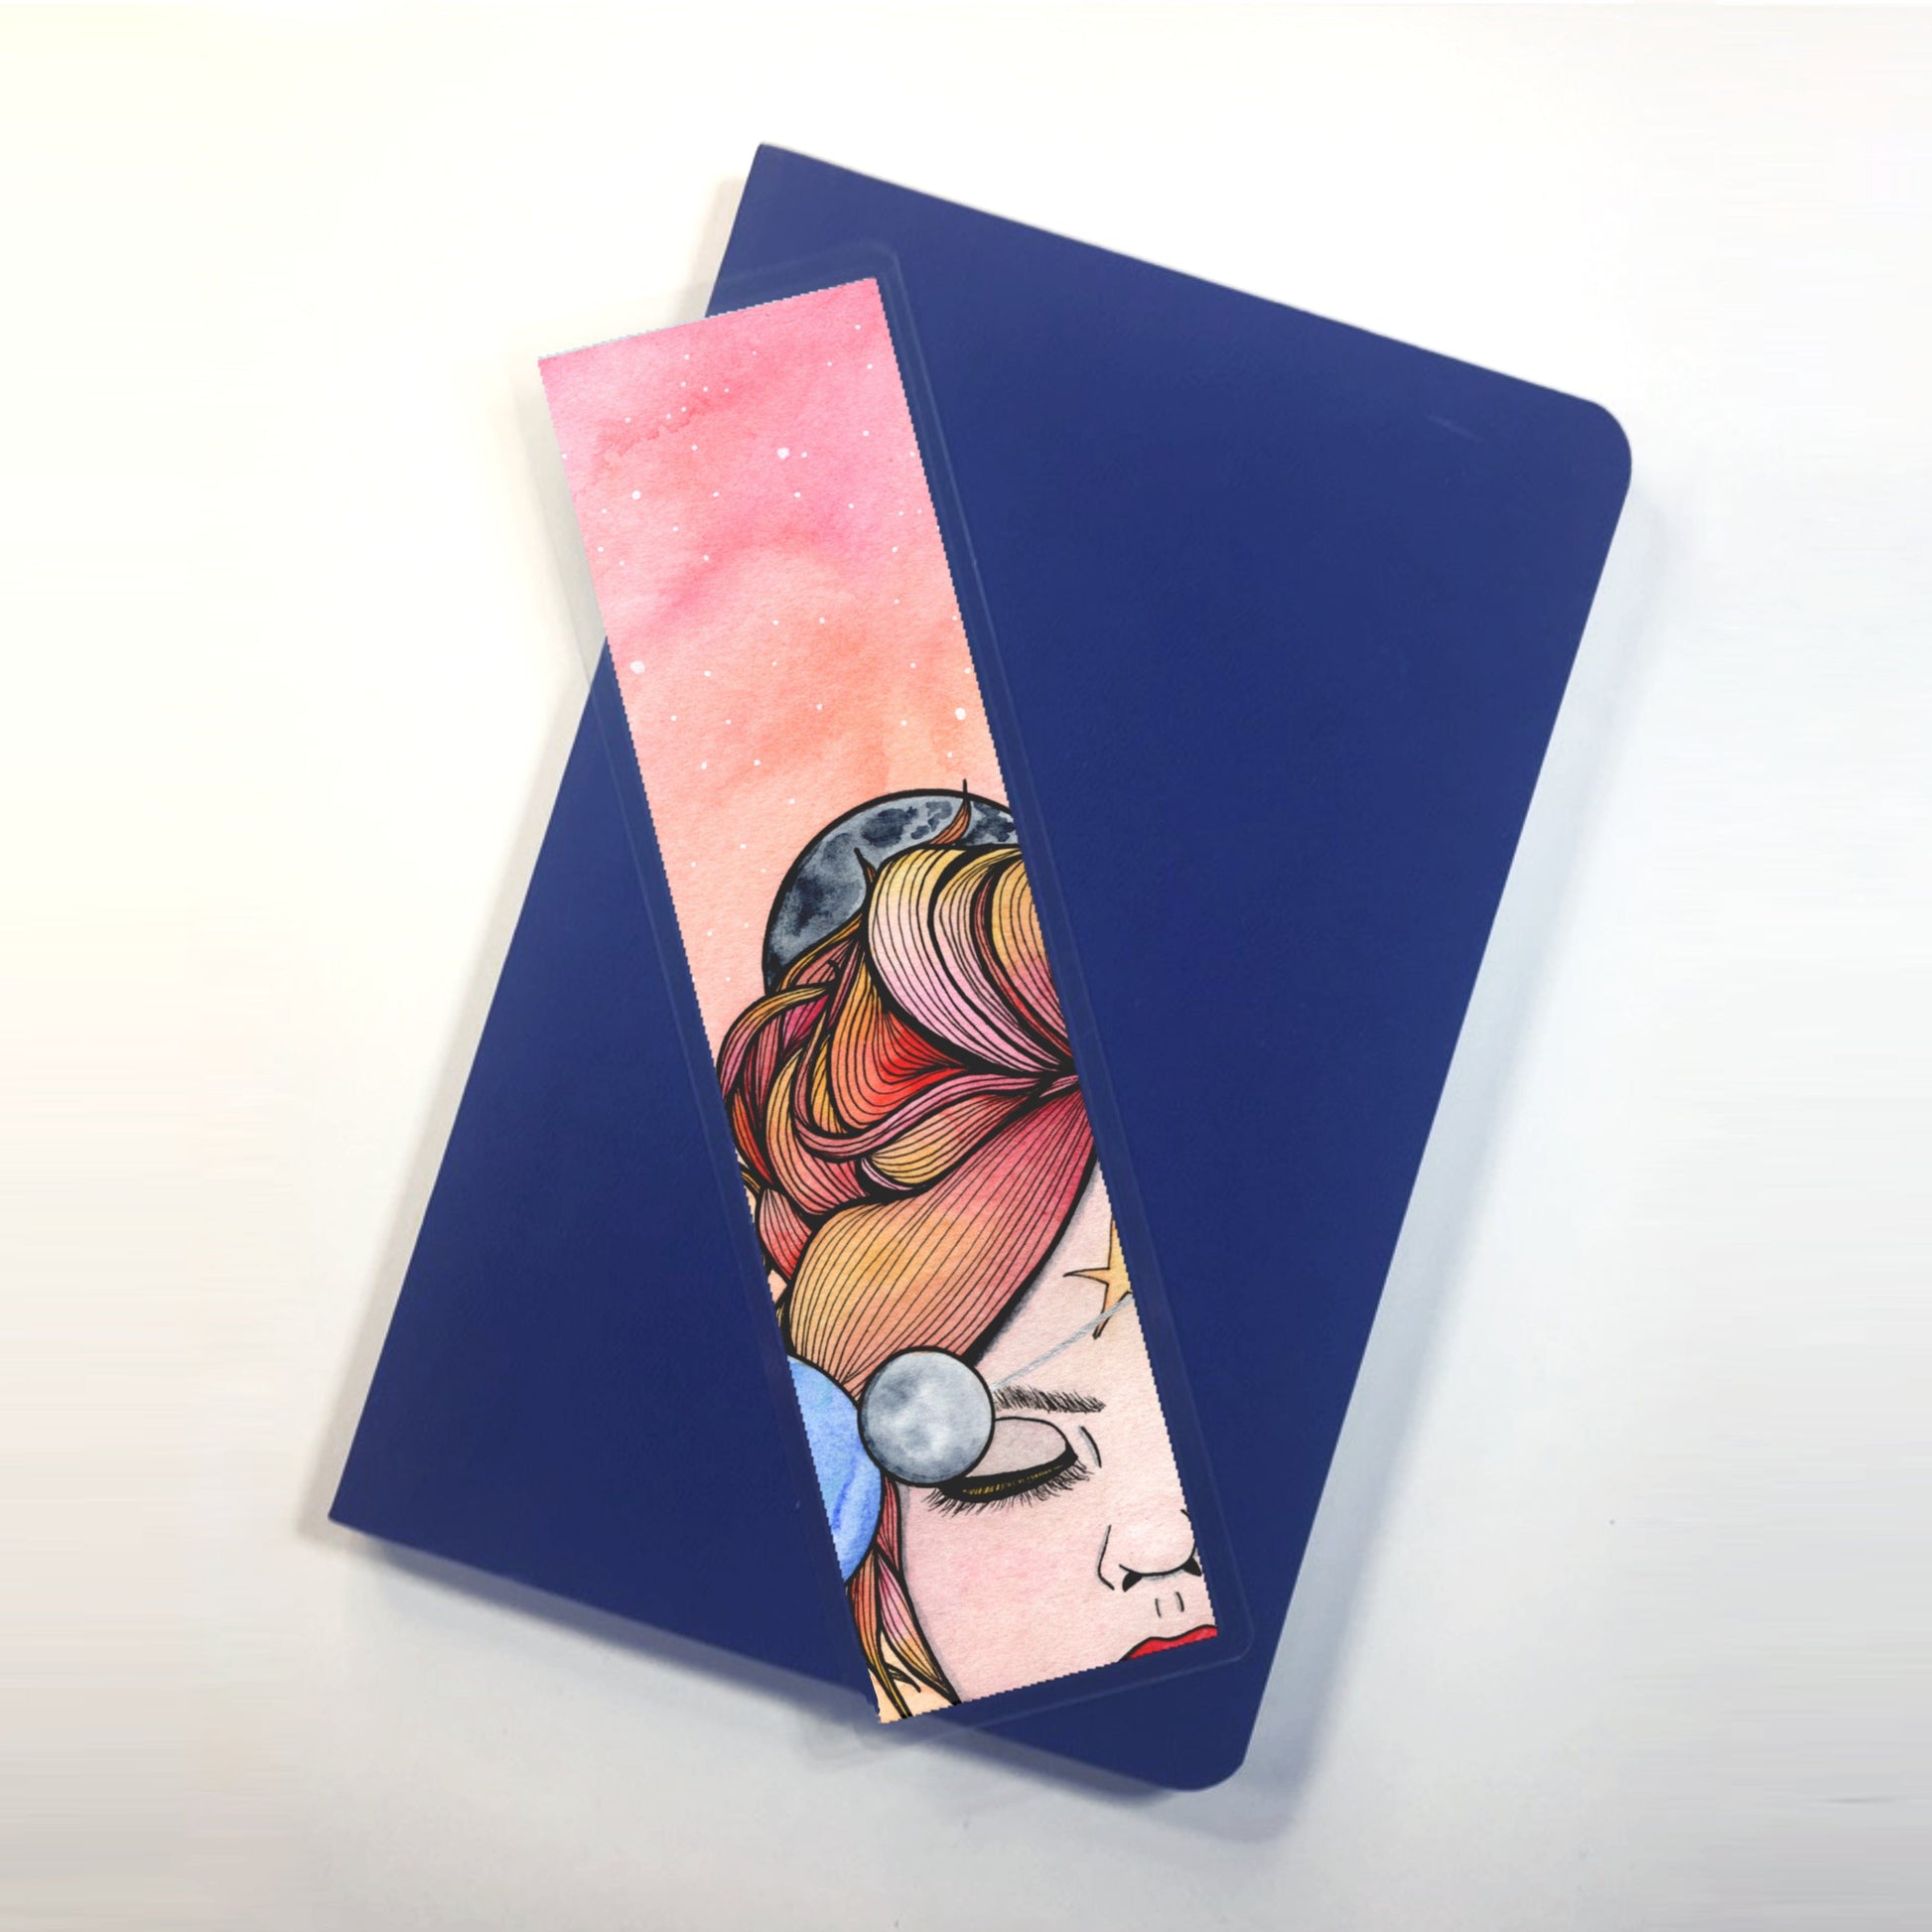 PinkPolish Design Bookmarks "Orbit" 2-Sided Bookmark